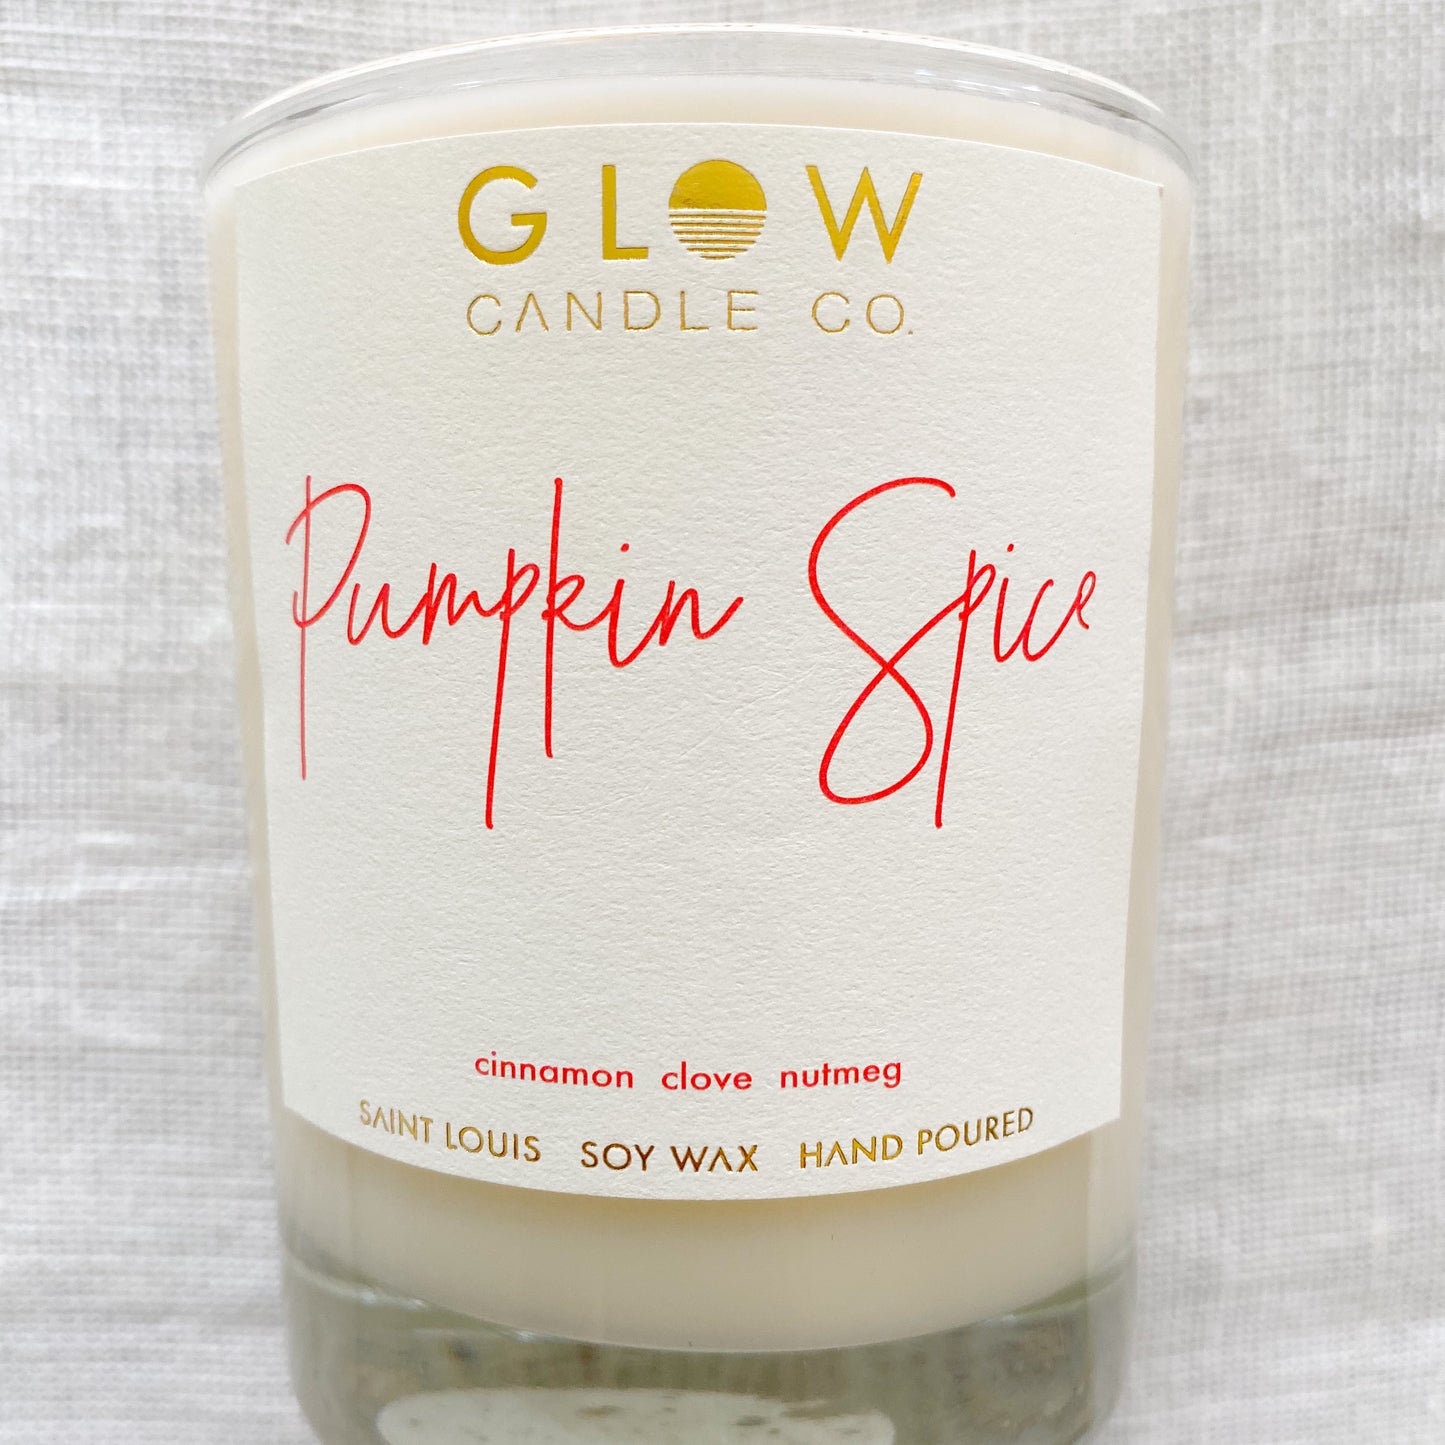 GLOW Pumpkin Pie Spice Candle